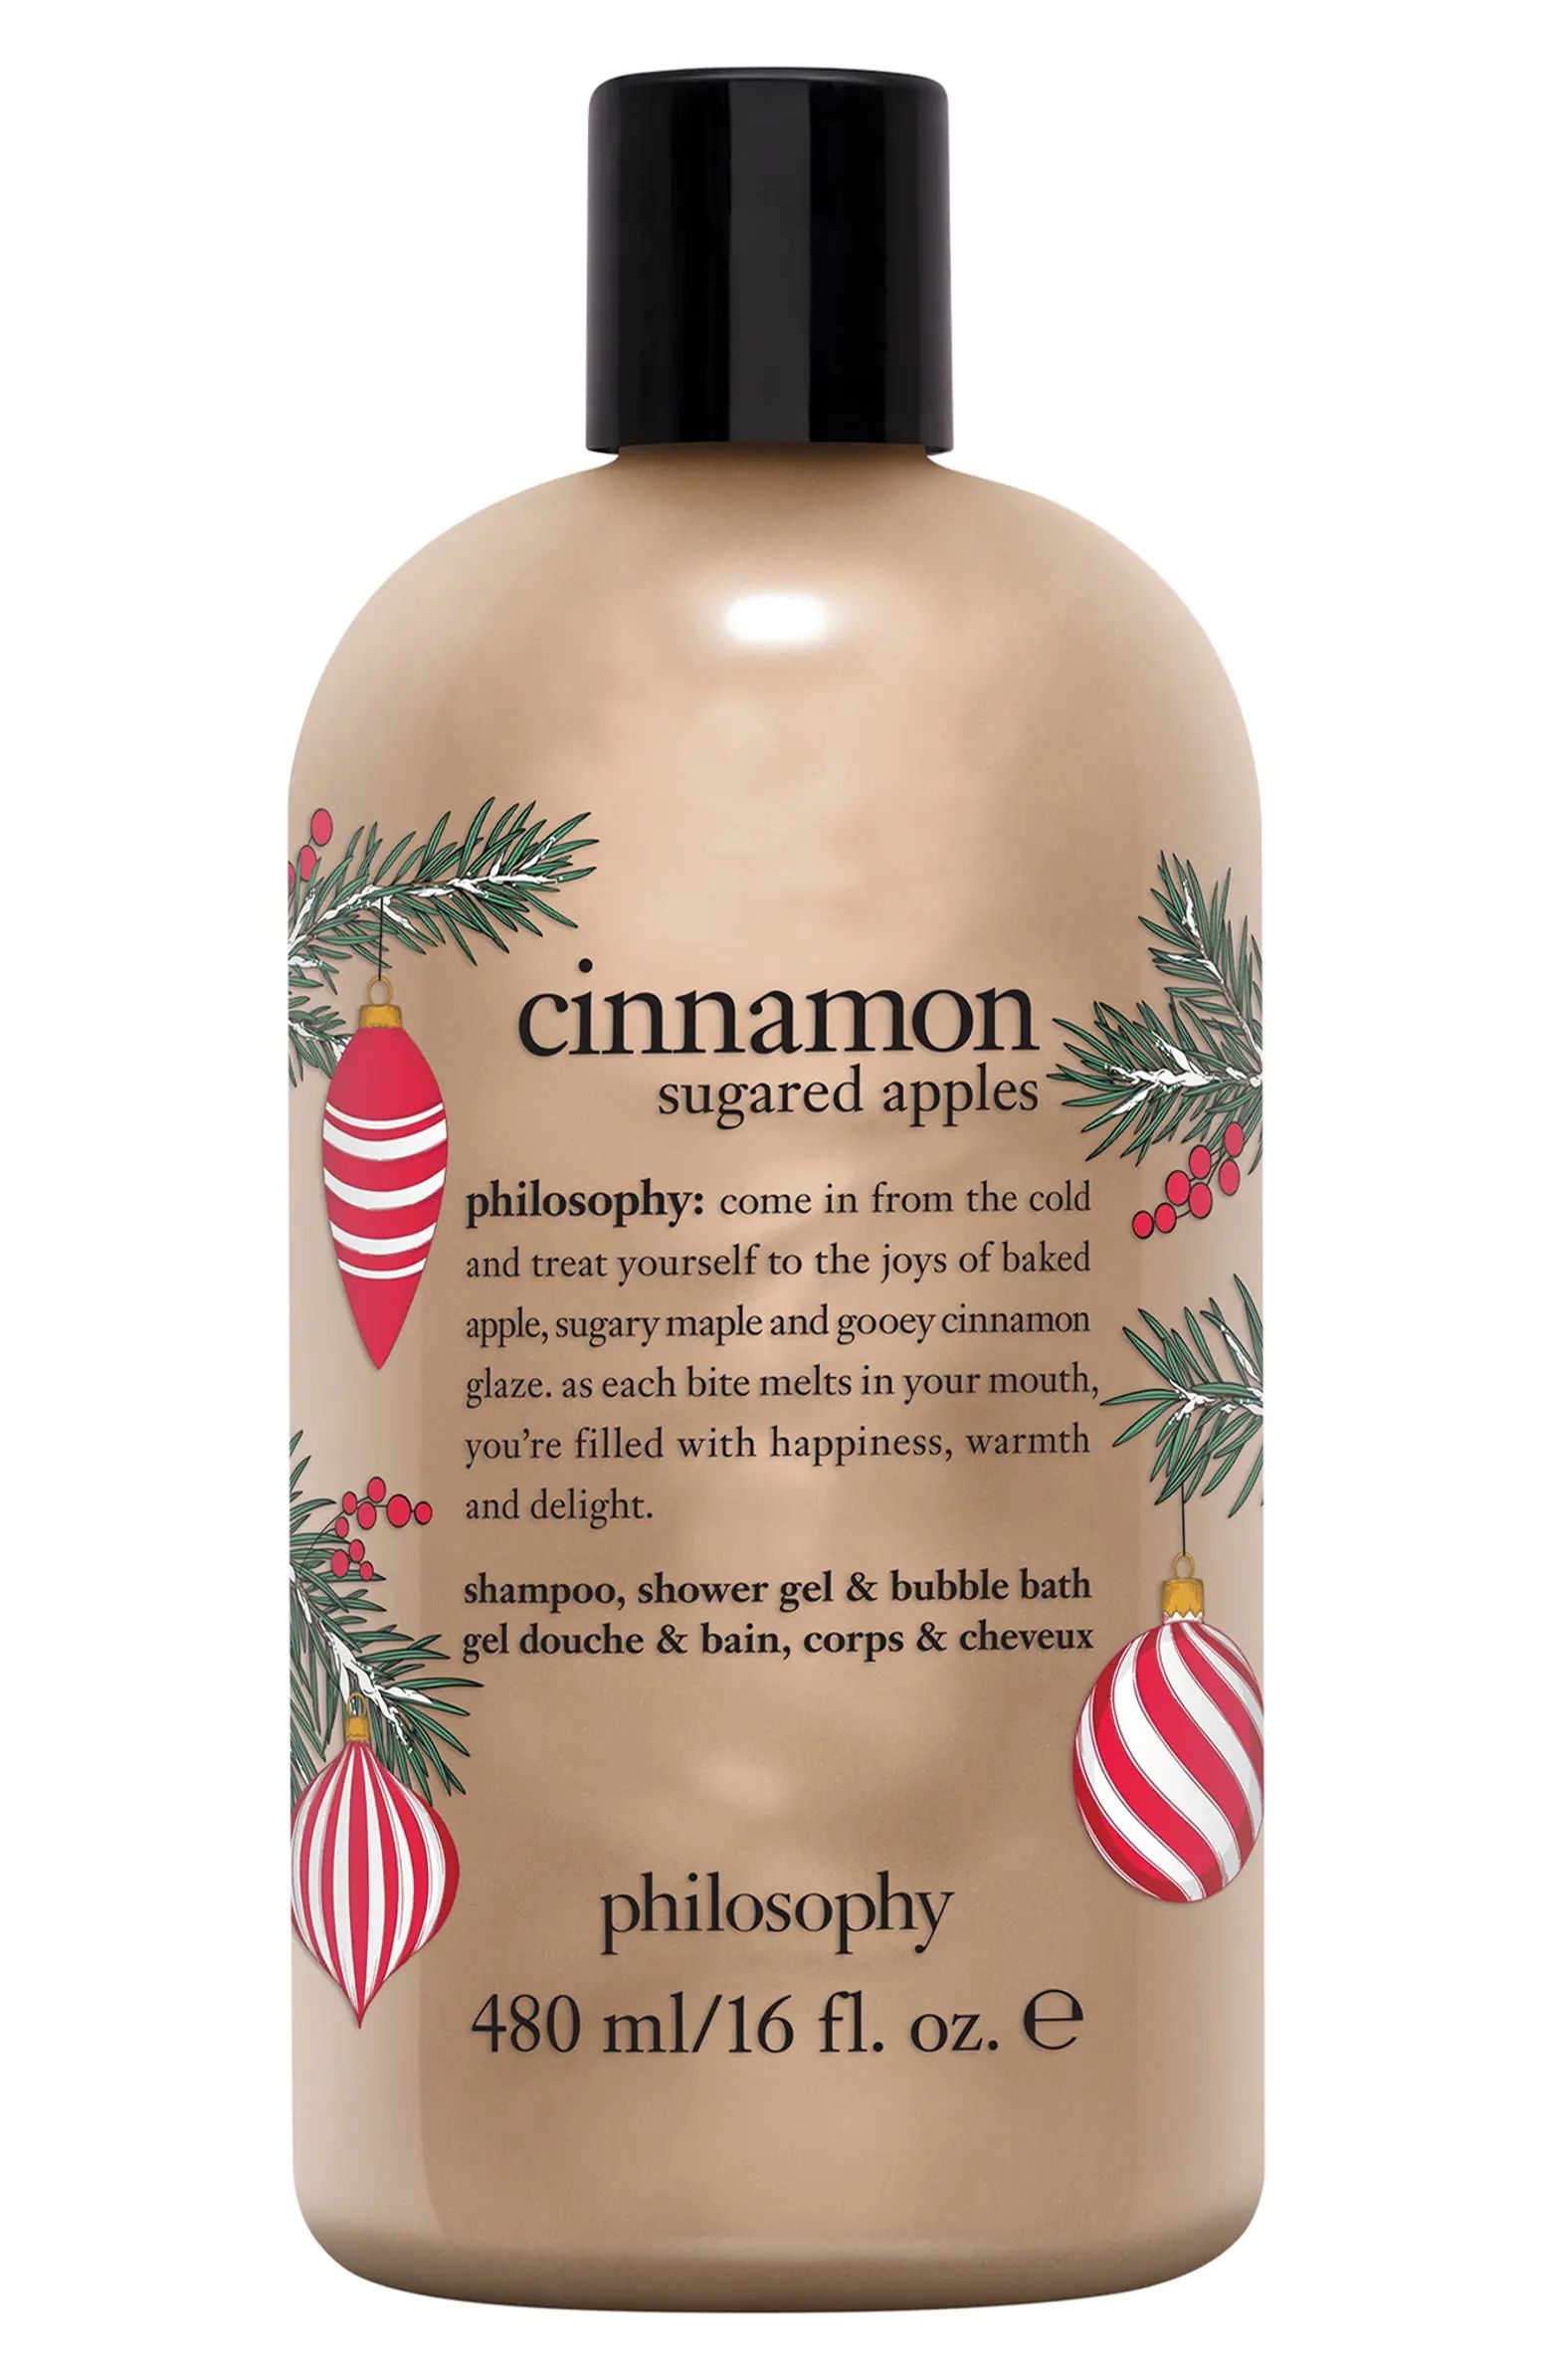 cinnamon sugared apples shampoo, shower gel & bubble bath | Nordstrom Rack